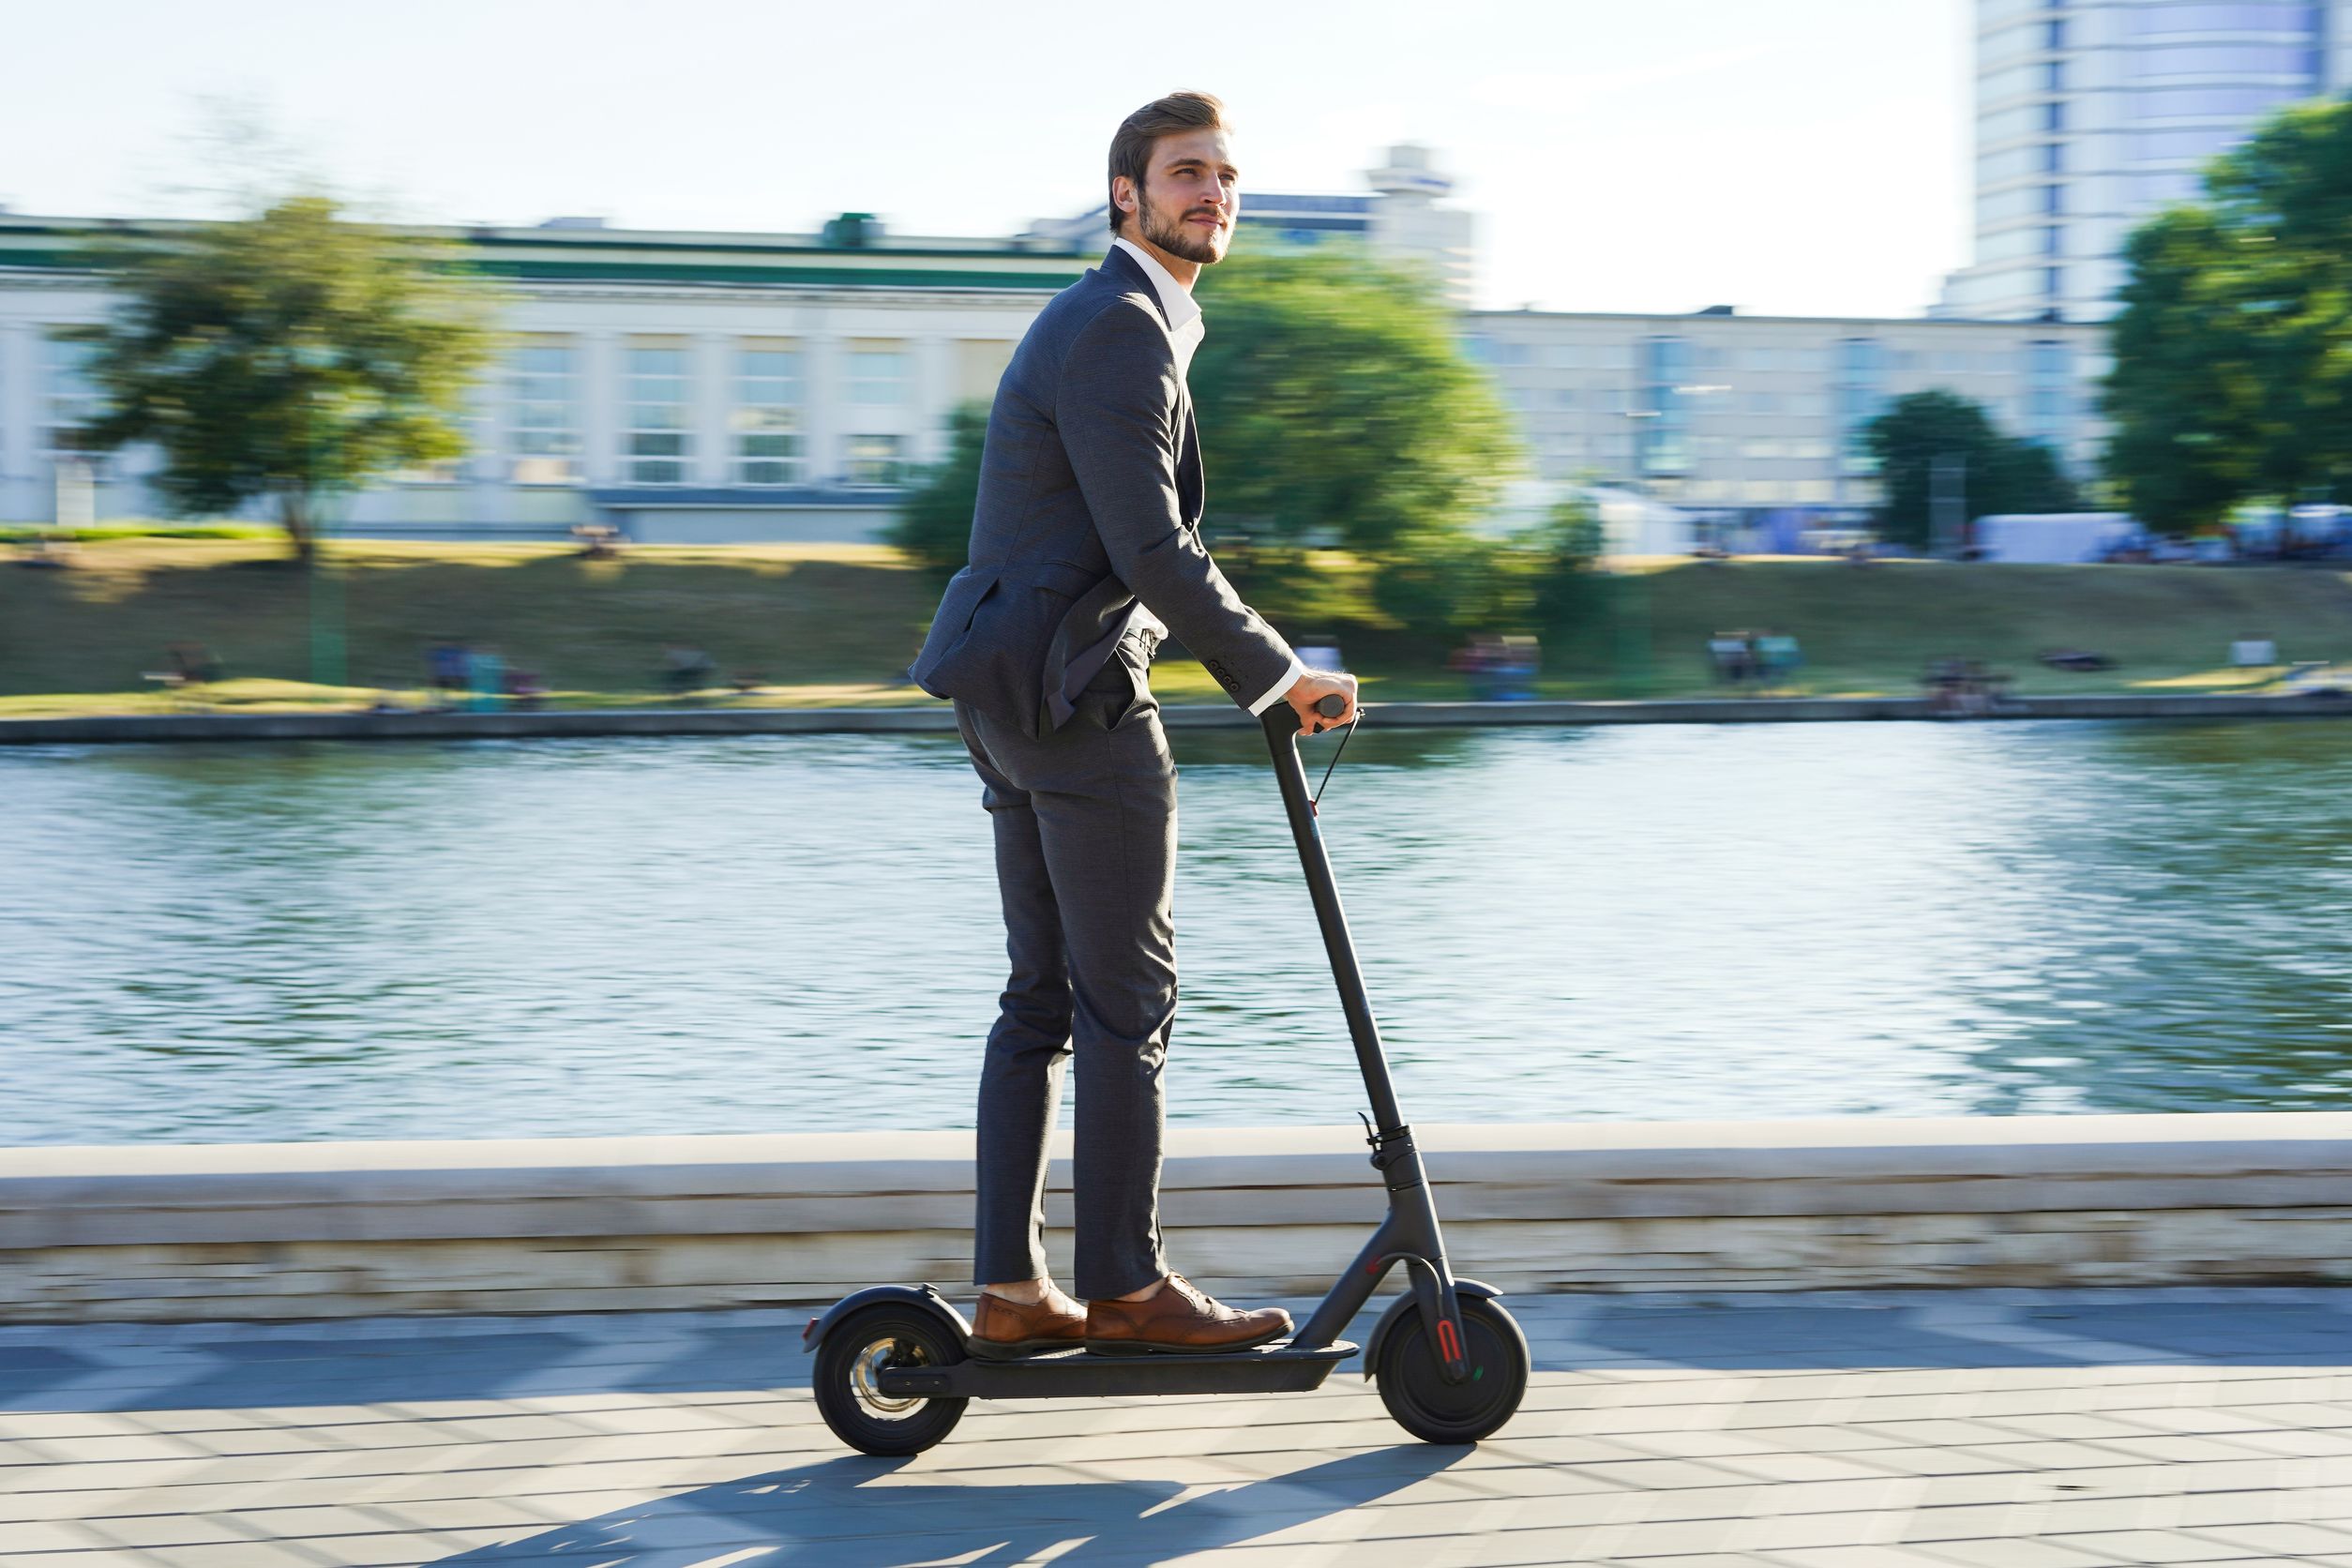 Businessman on an E-scooter